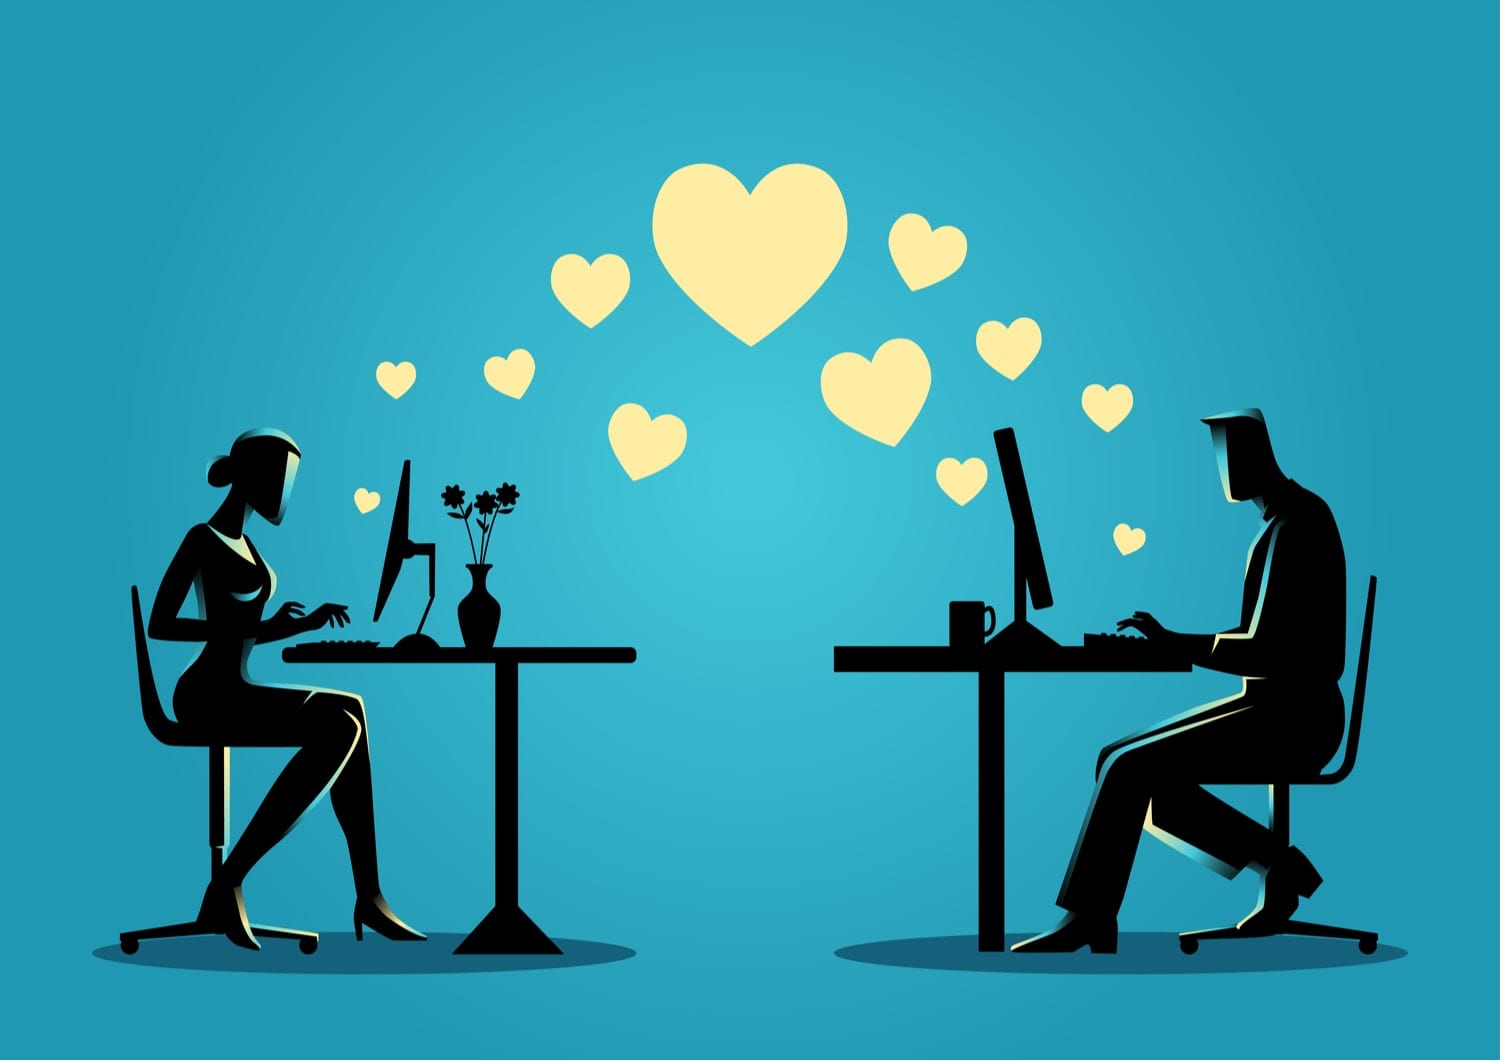 Online Dating Relationships